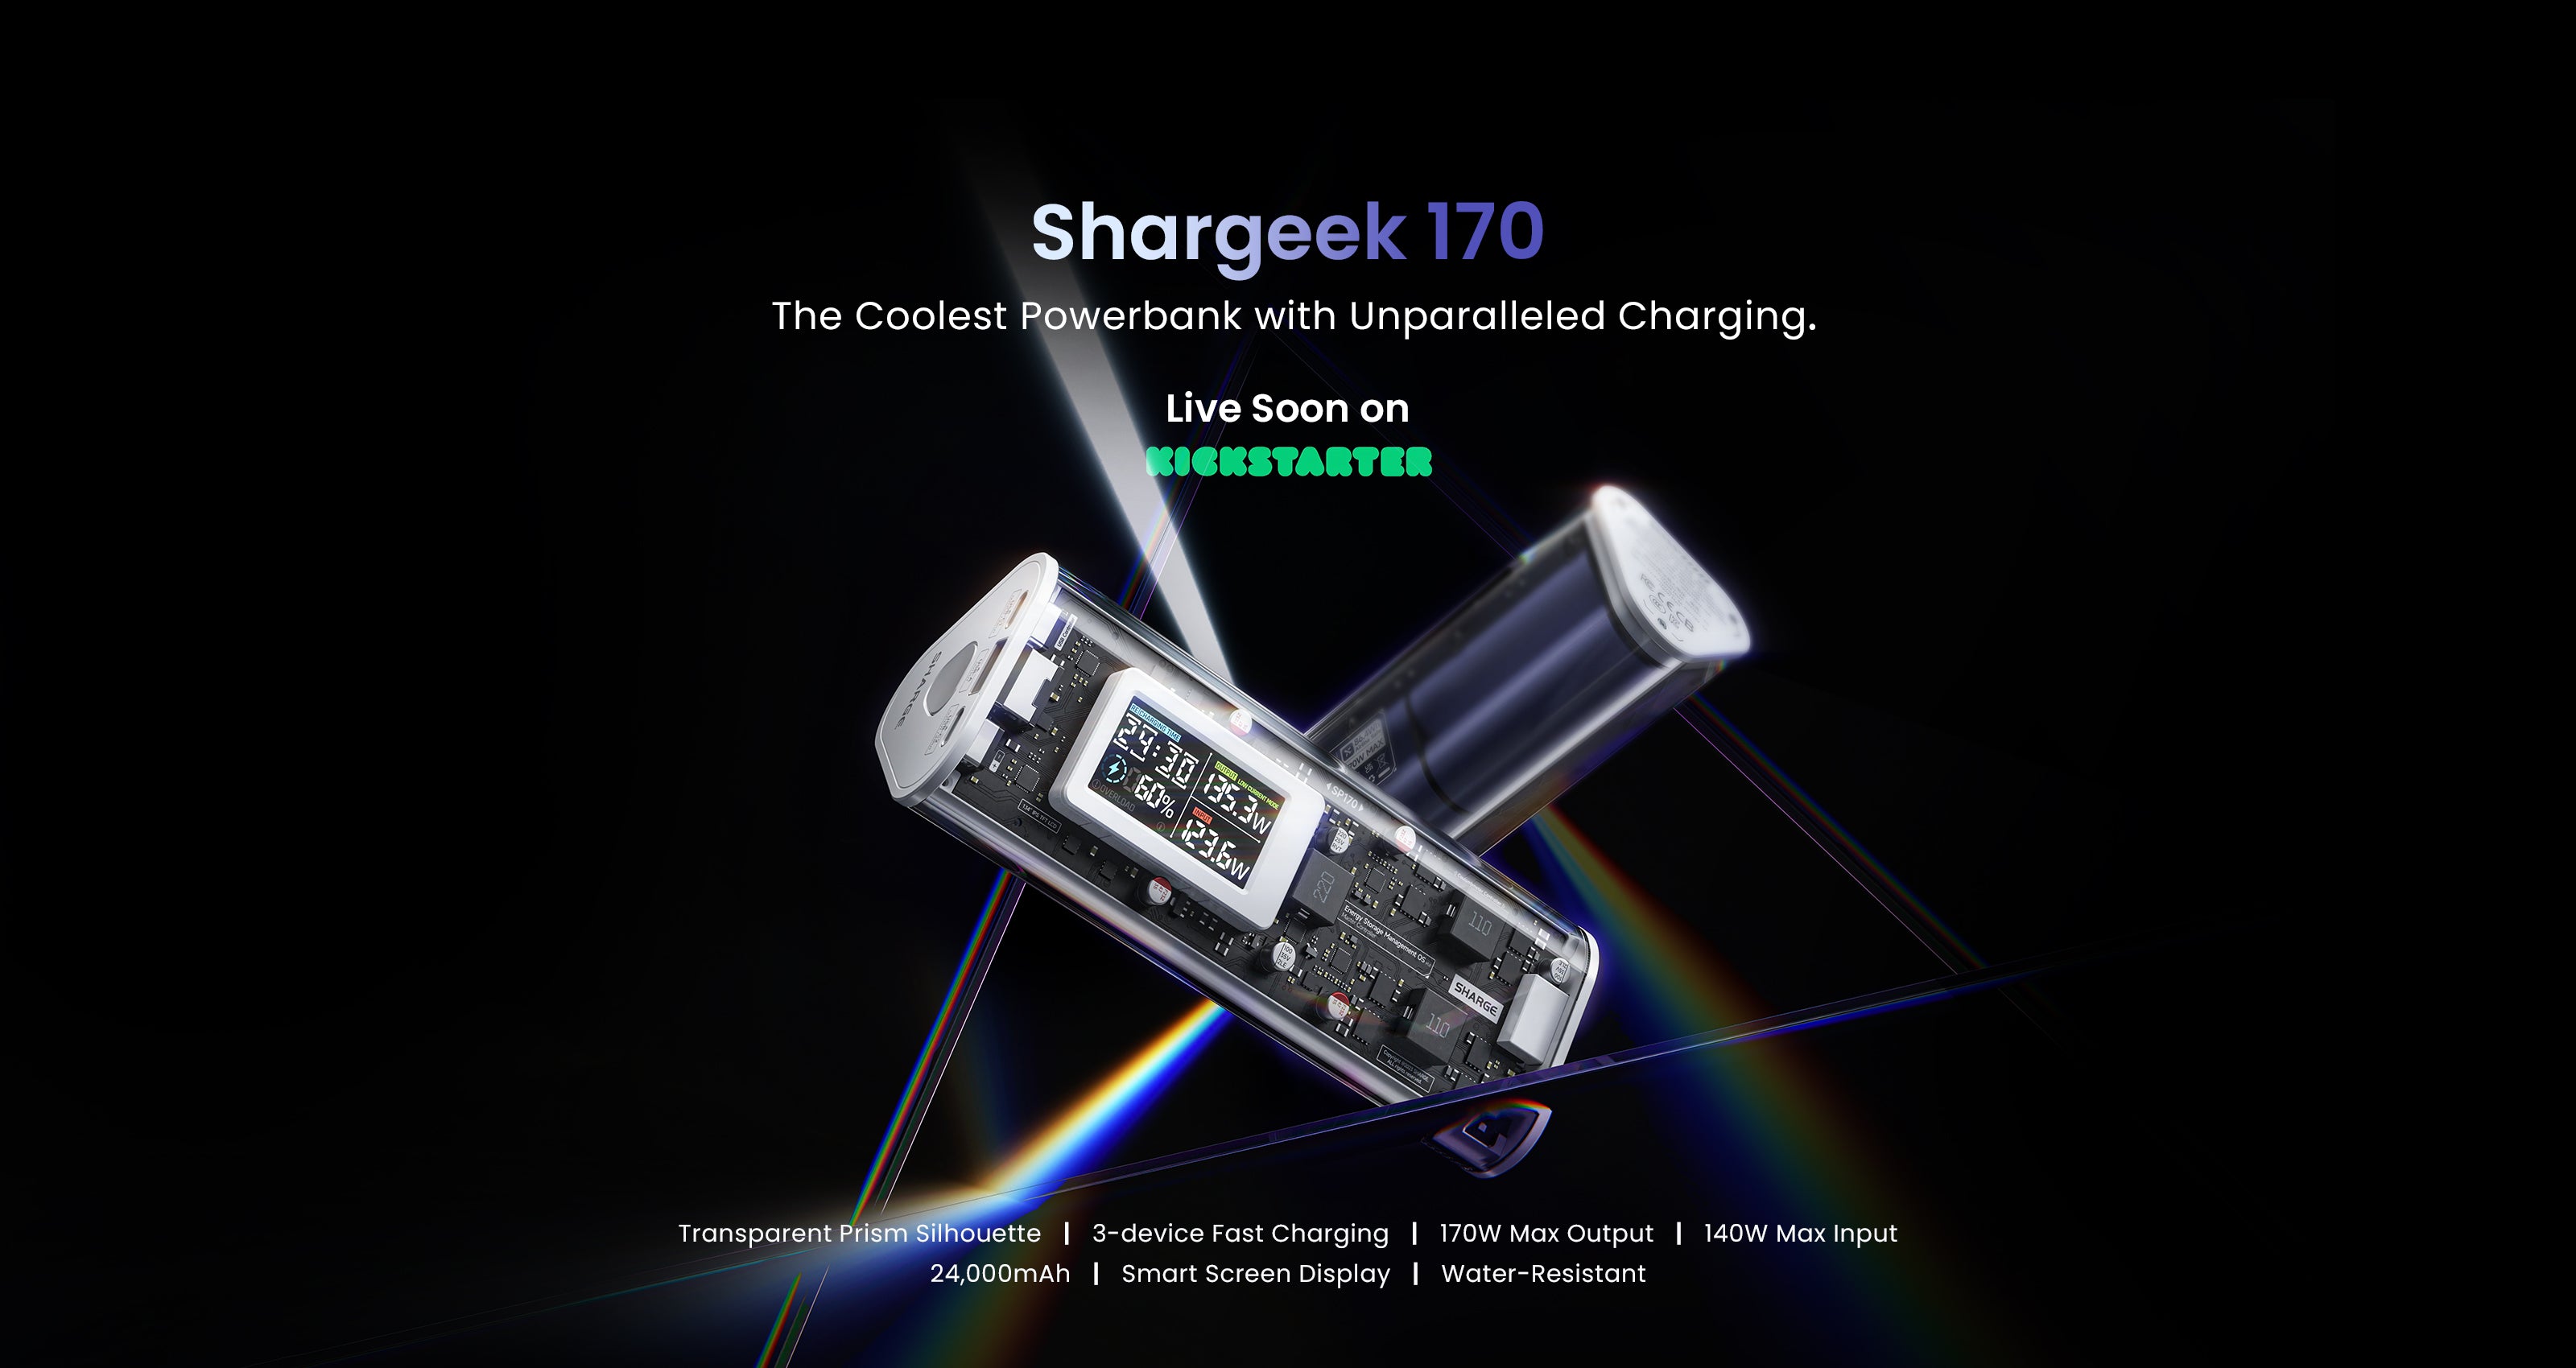 SHARGE Shargeek 170 power bank